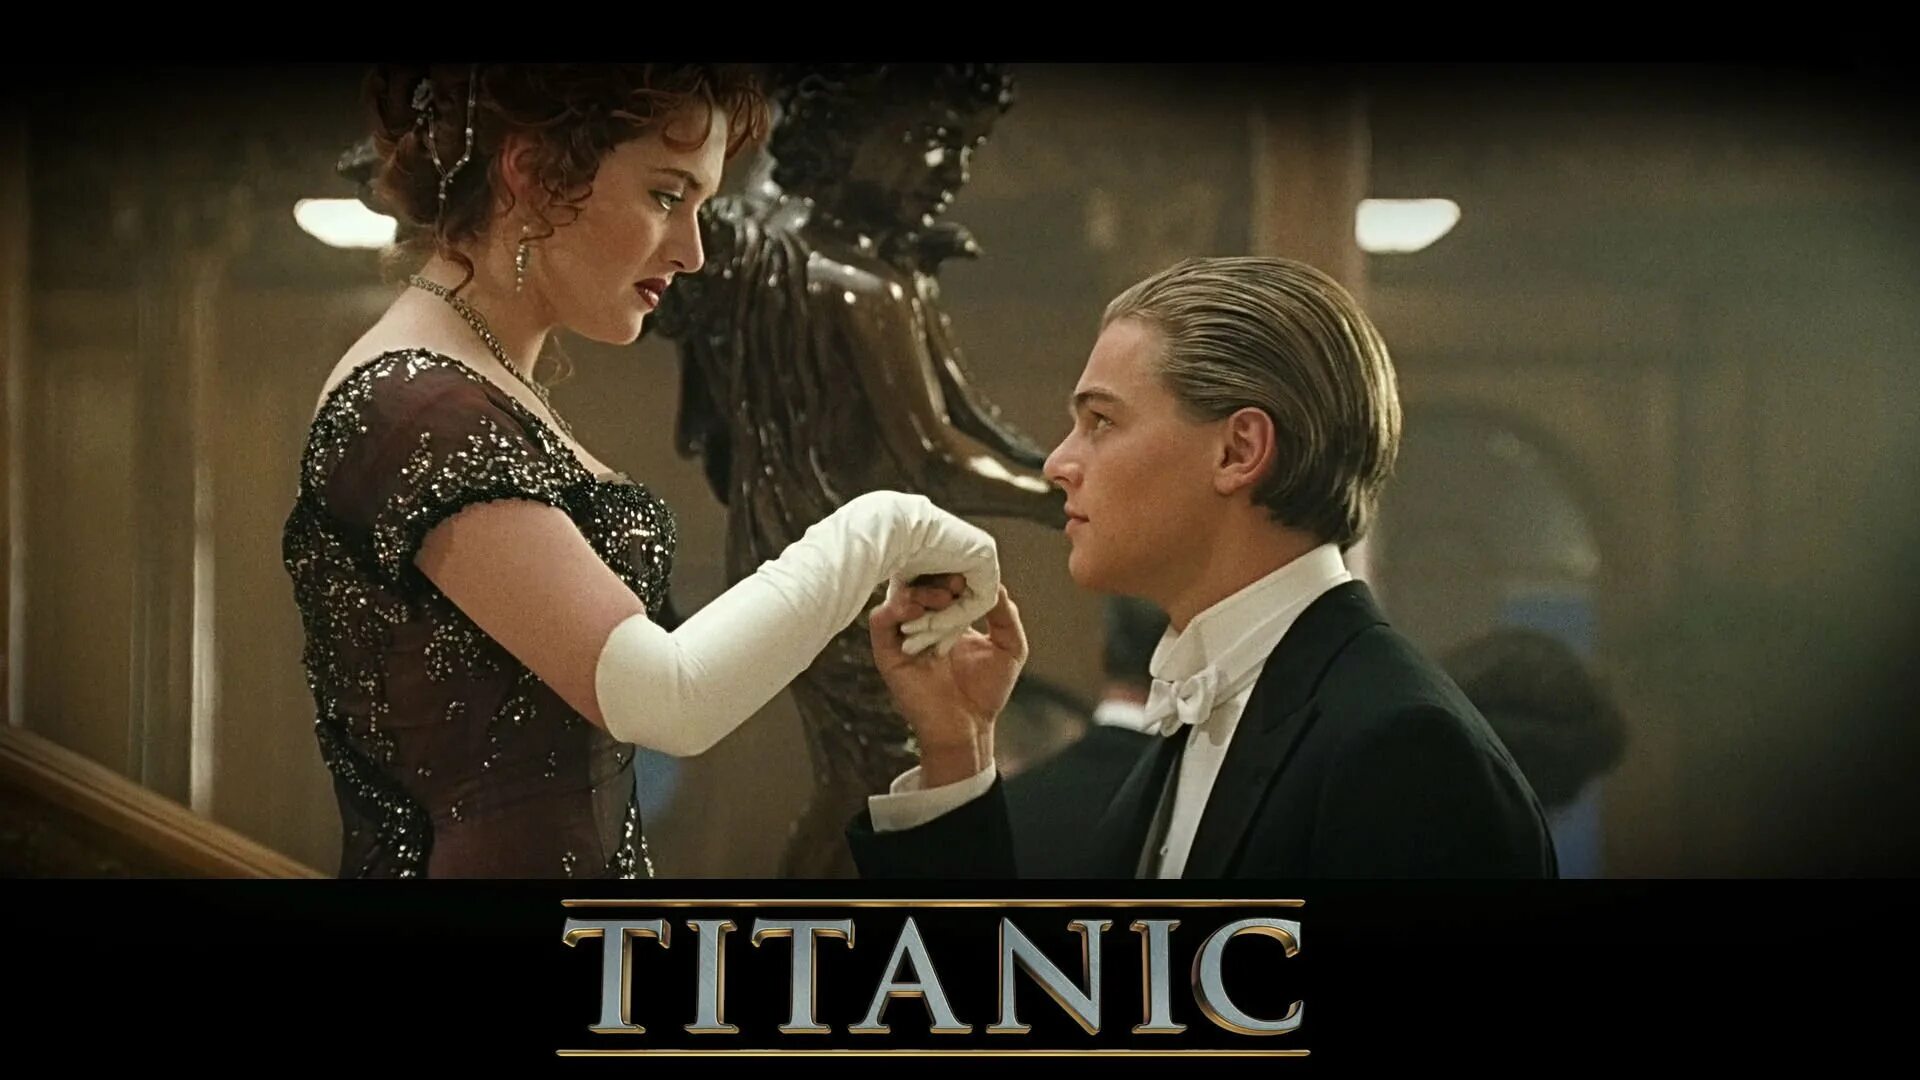 Титаник кадры. Титаник 1997 Джек и роза. Титаник фильм 1997 роза и Джек. Кейт и Лео Титаник. СТС Титаник 1997.